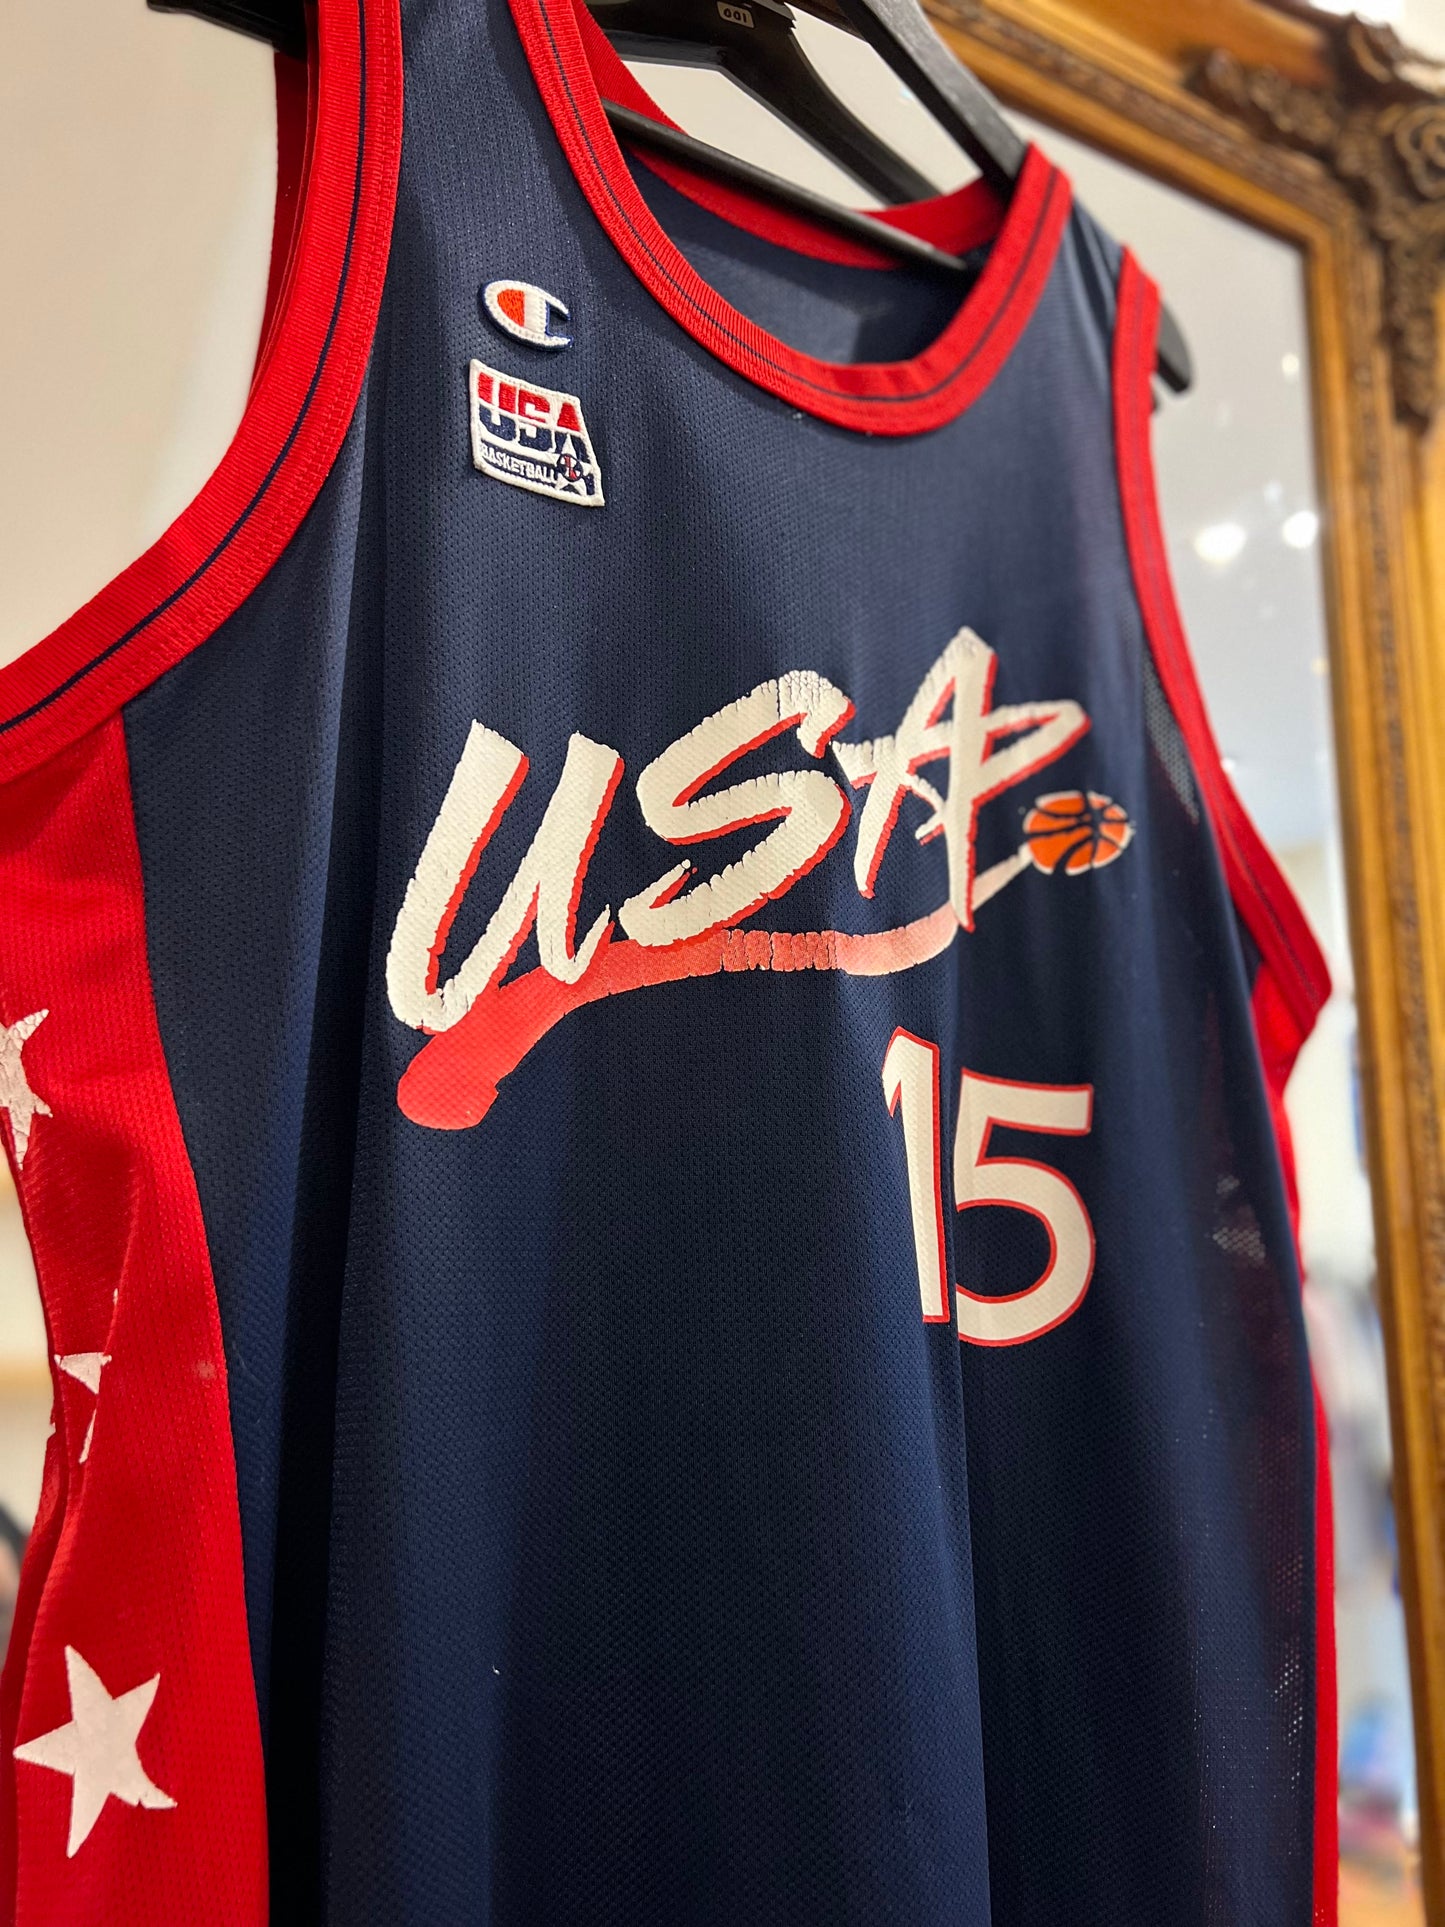 Vintage 90's Champion NBA USA Dream Team Olympics Hakeem Olajuwon Jersey (XL)